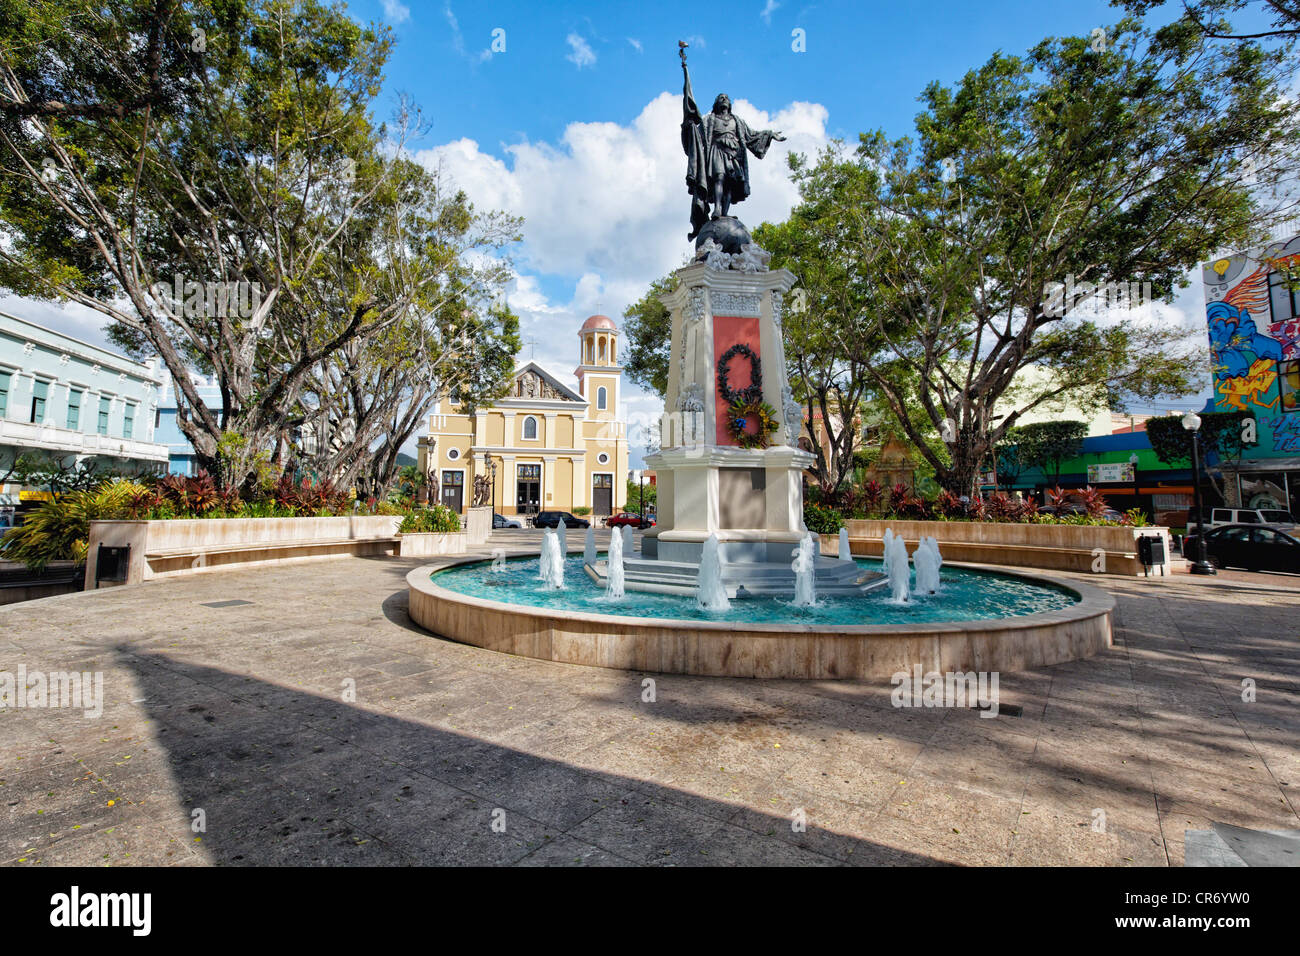 Statue of Christopher Columbus on Plaza Colon, Mayaguez, Puerto Rico Stock Photo